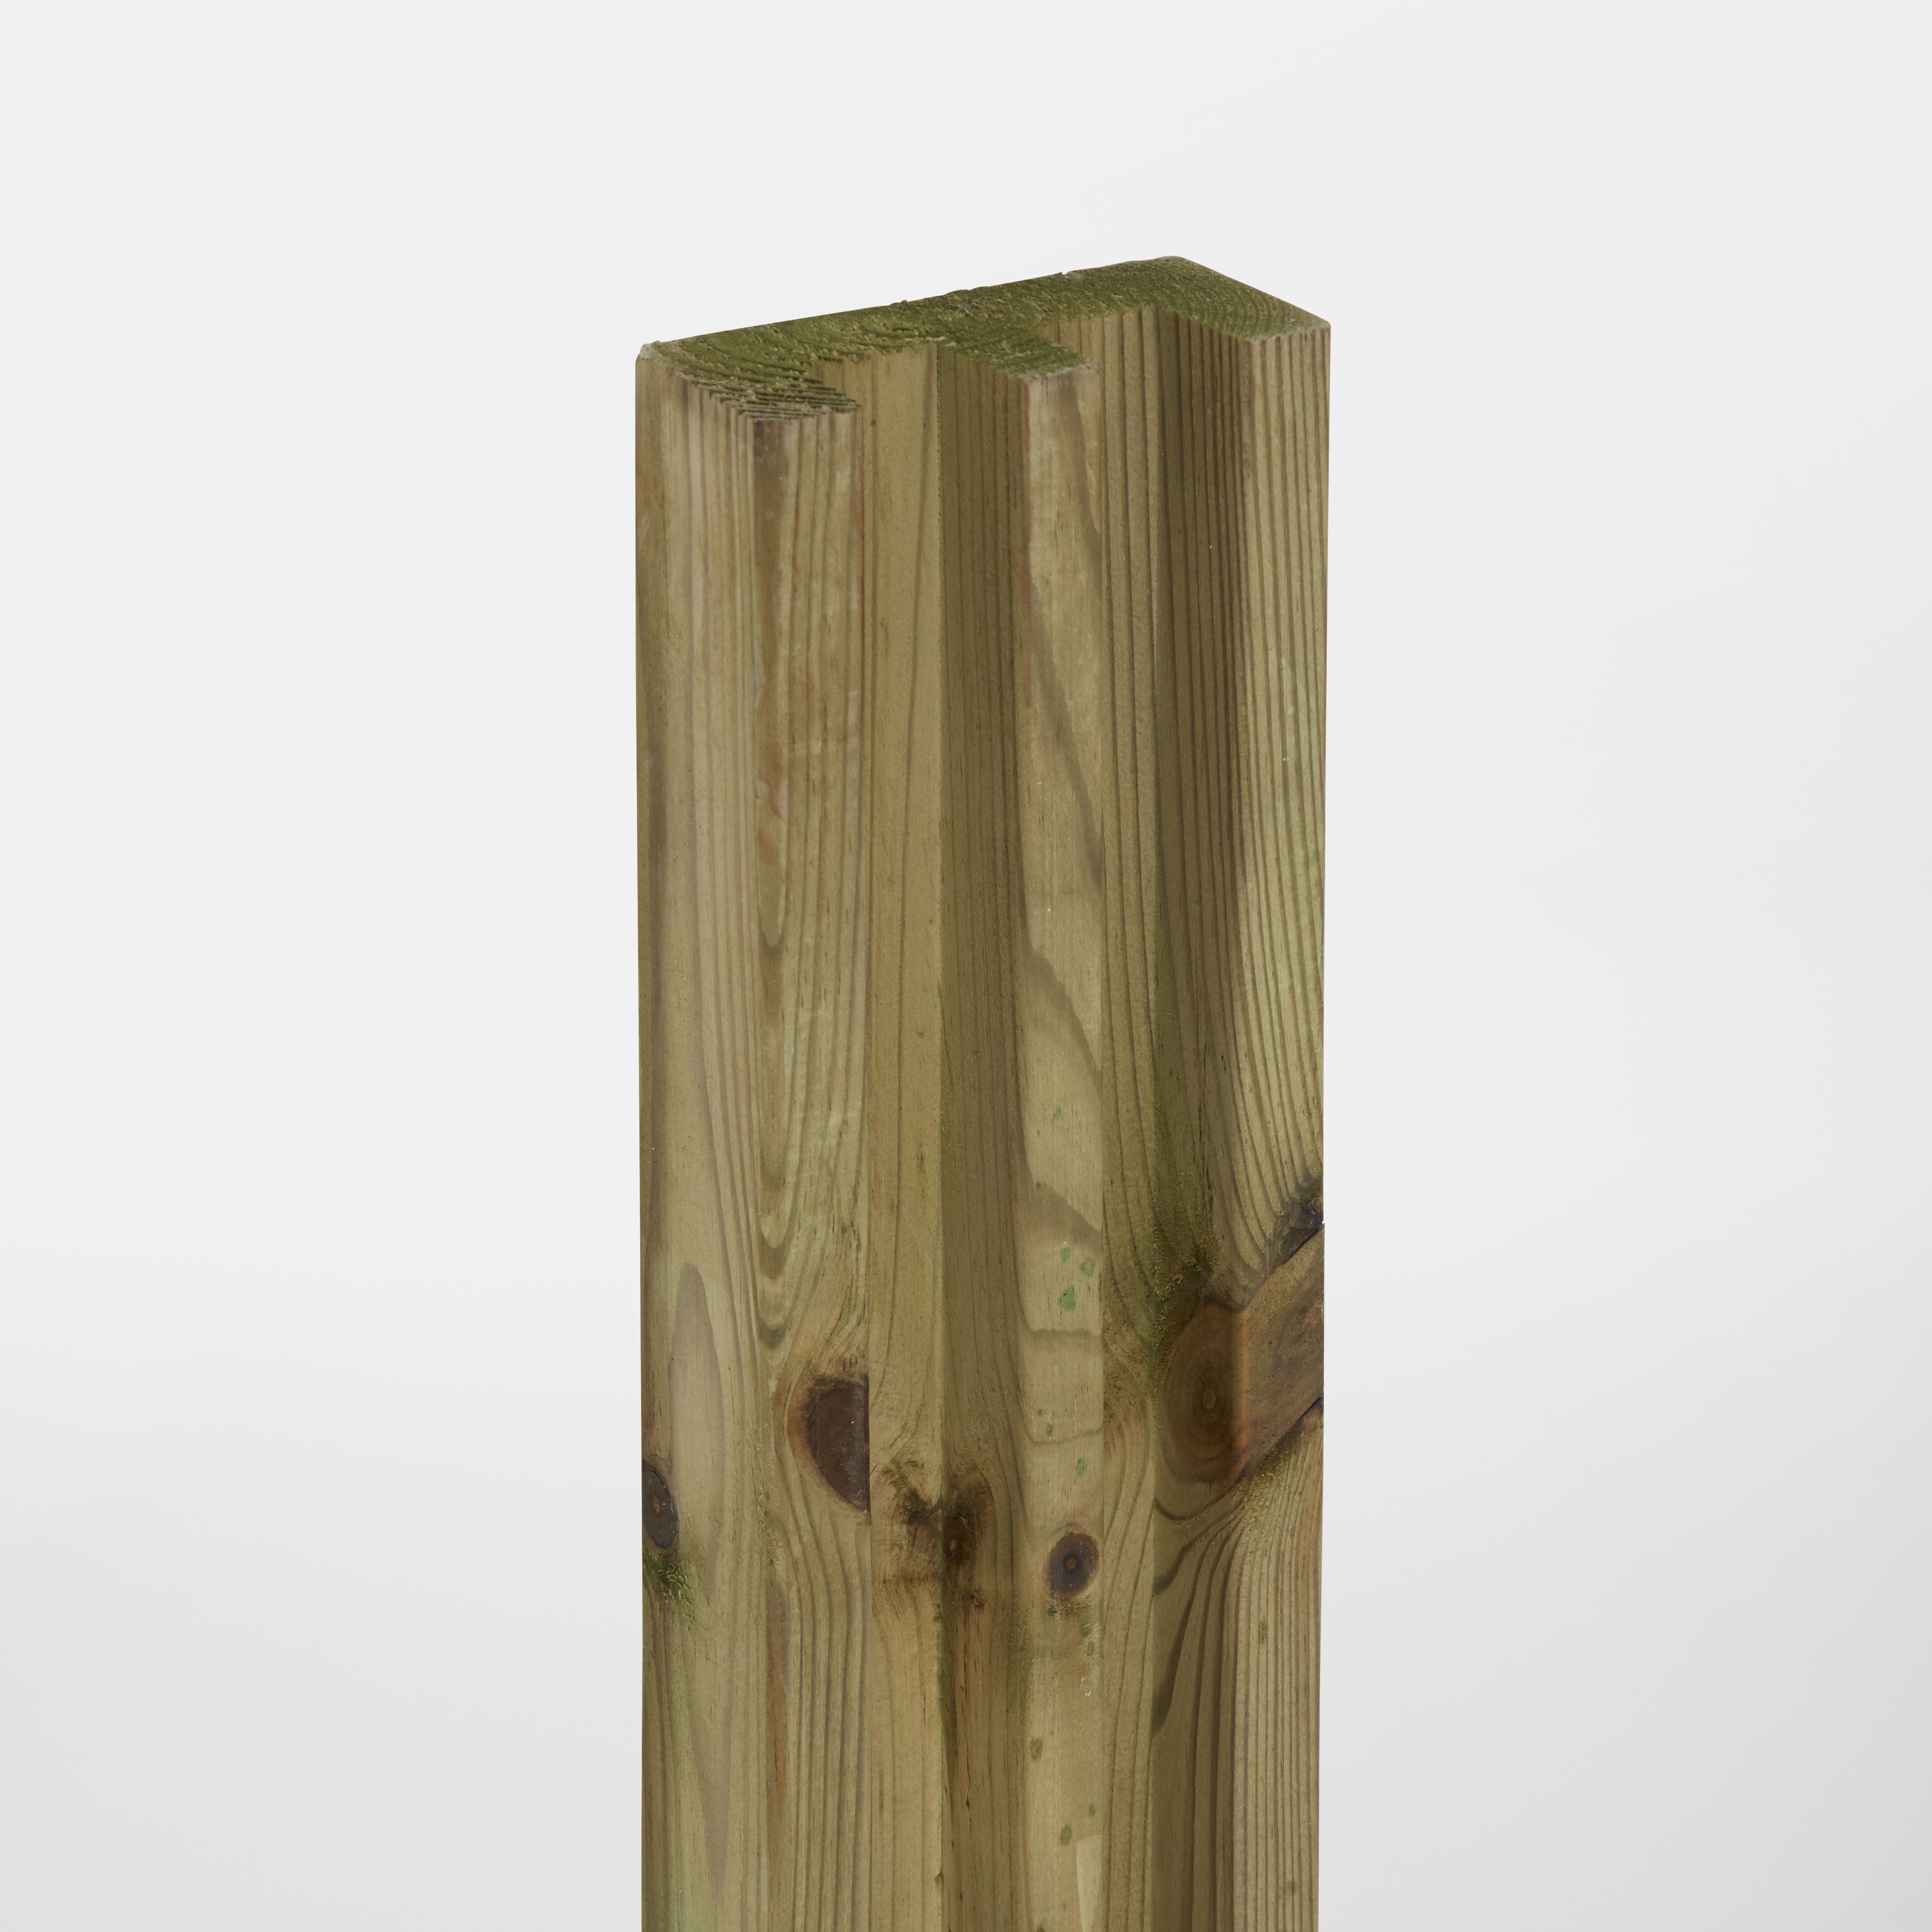 Klikstrom Lemhi W-shaped Wooden Fence post (H)2.4m (W)90mm